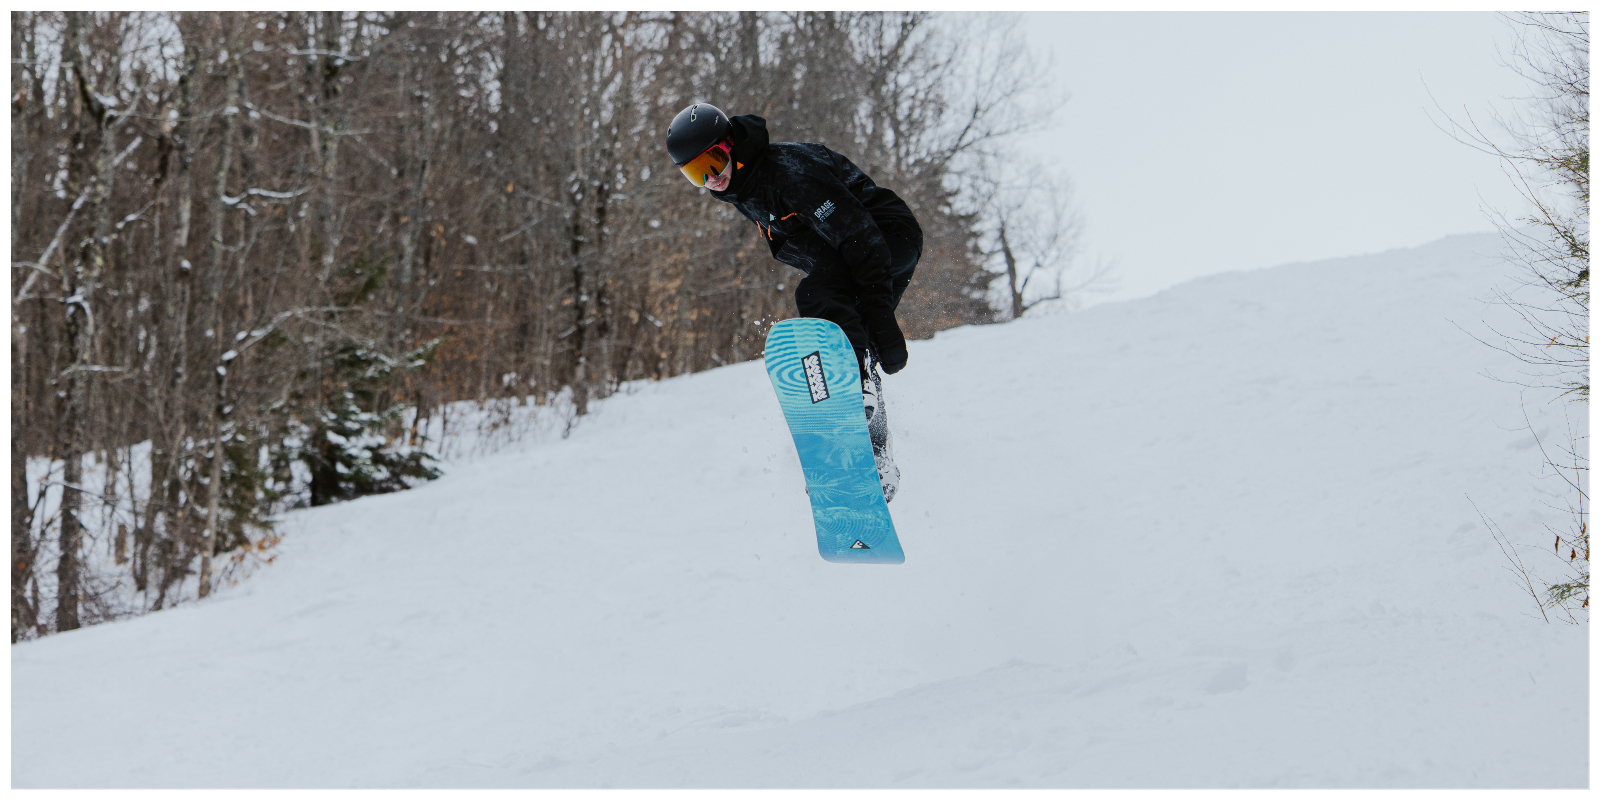 snowboards, snowboarding, TSM, The Ski Monster, K2, K2 snowboards, Ride, BOA, snow, winter, New Hampshire